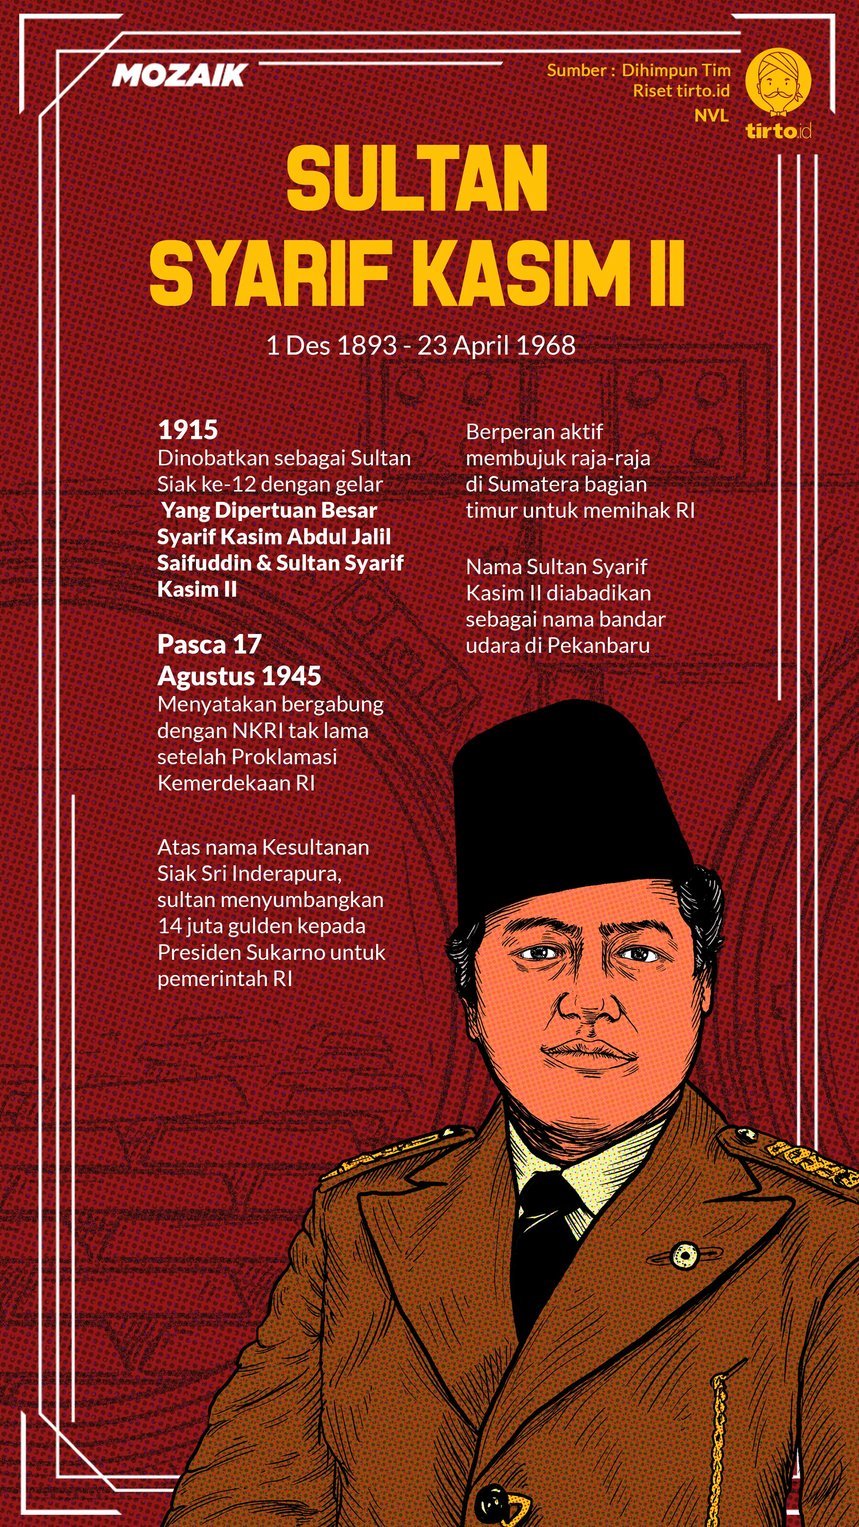 Infografik Mozaik Sultan Syarif Kasim II